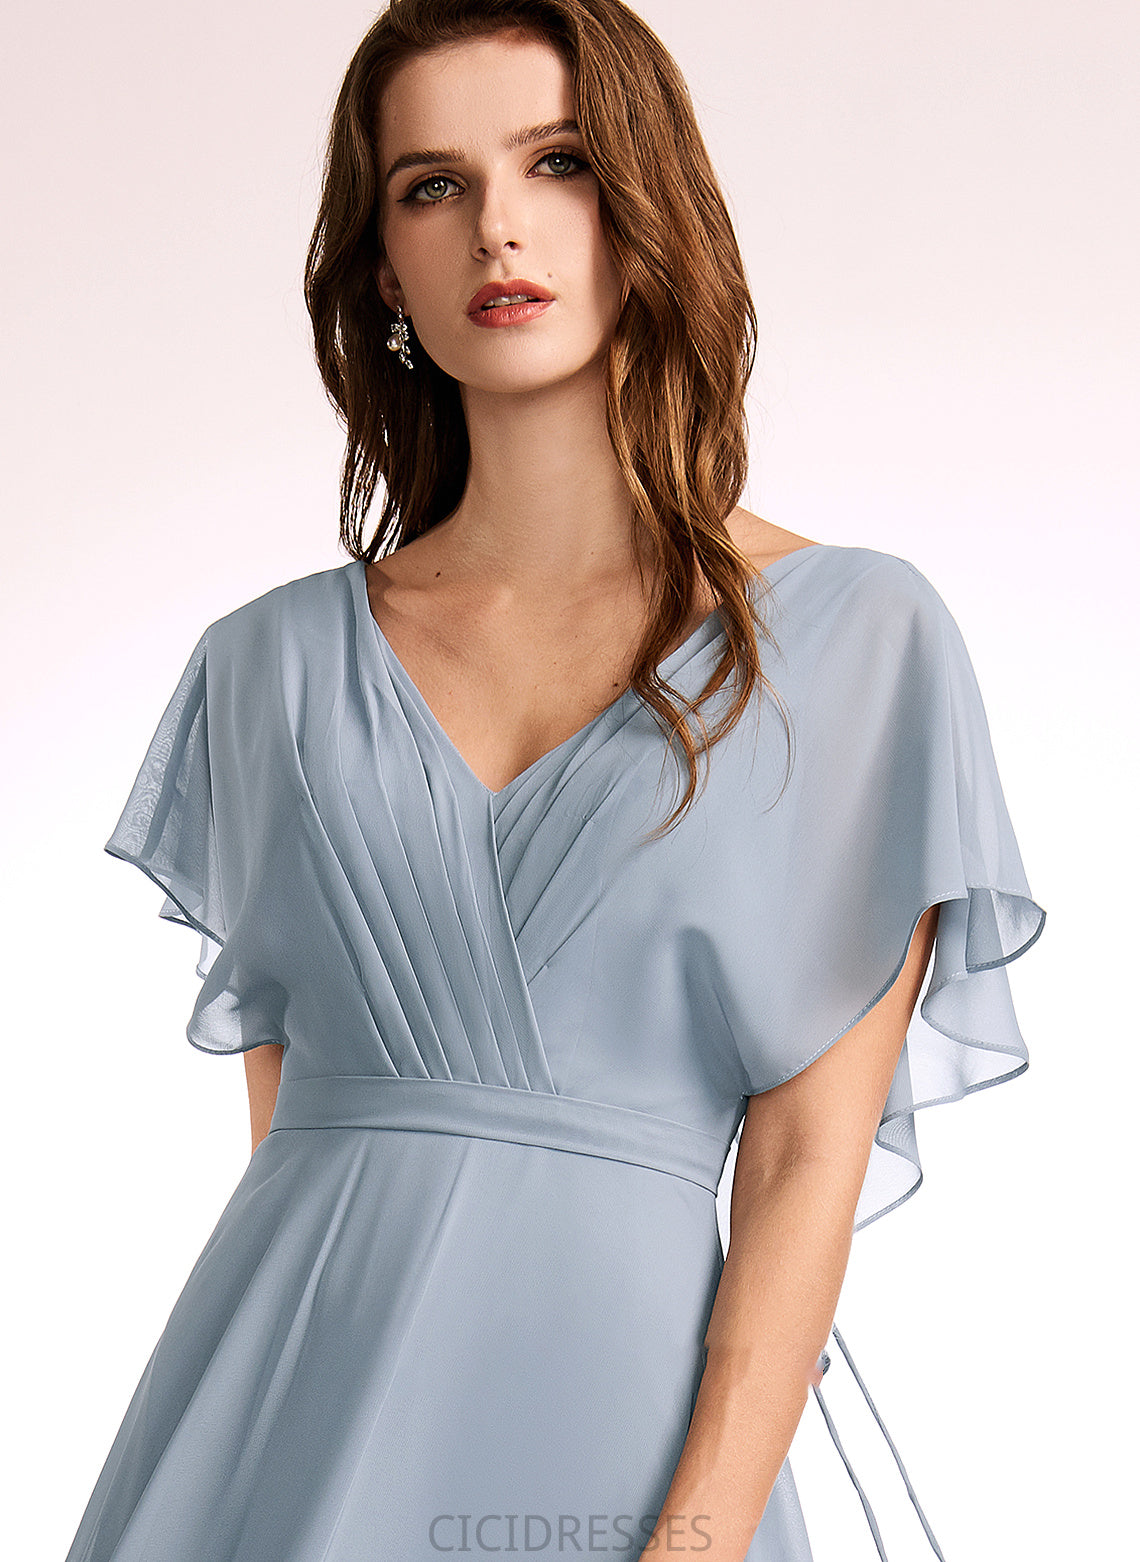 A-Line Ruffle Fabric Floor-Length Silhouette Neckline Embellishment V-neck Length Lara Floor Length Sleeveless Bridesmaid Dresses